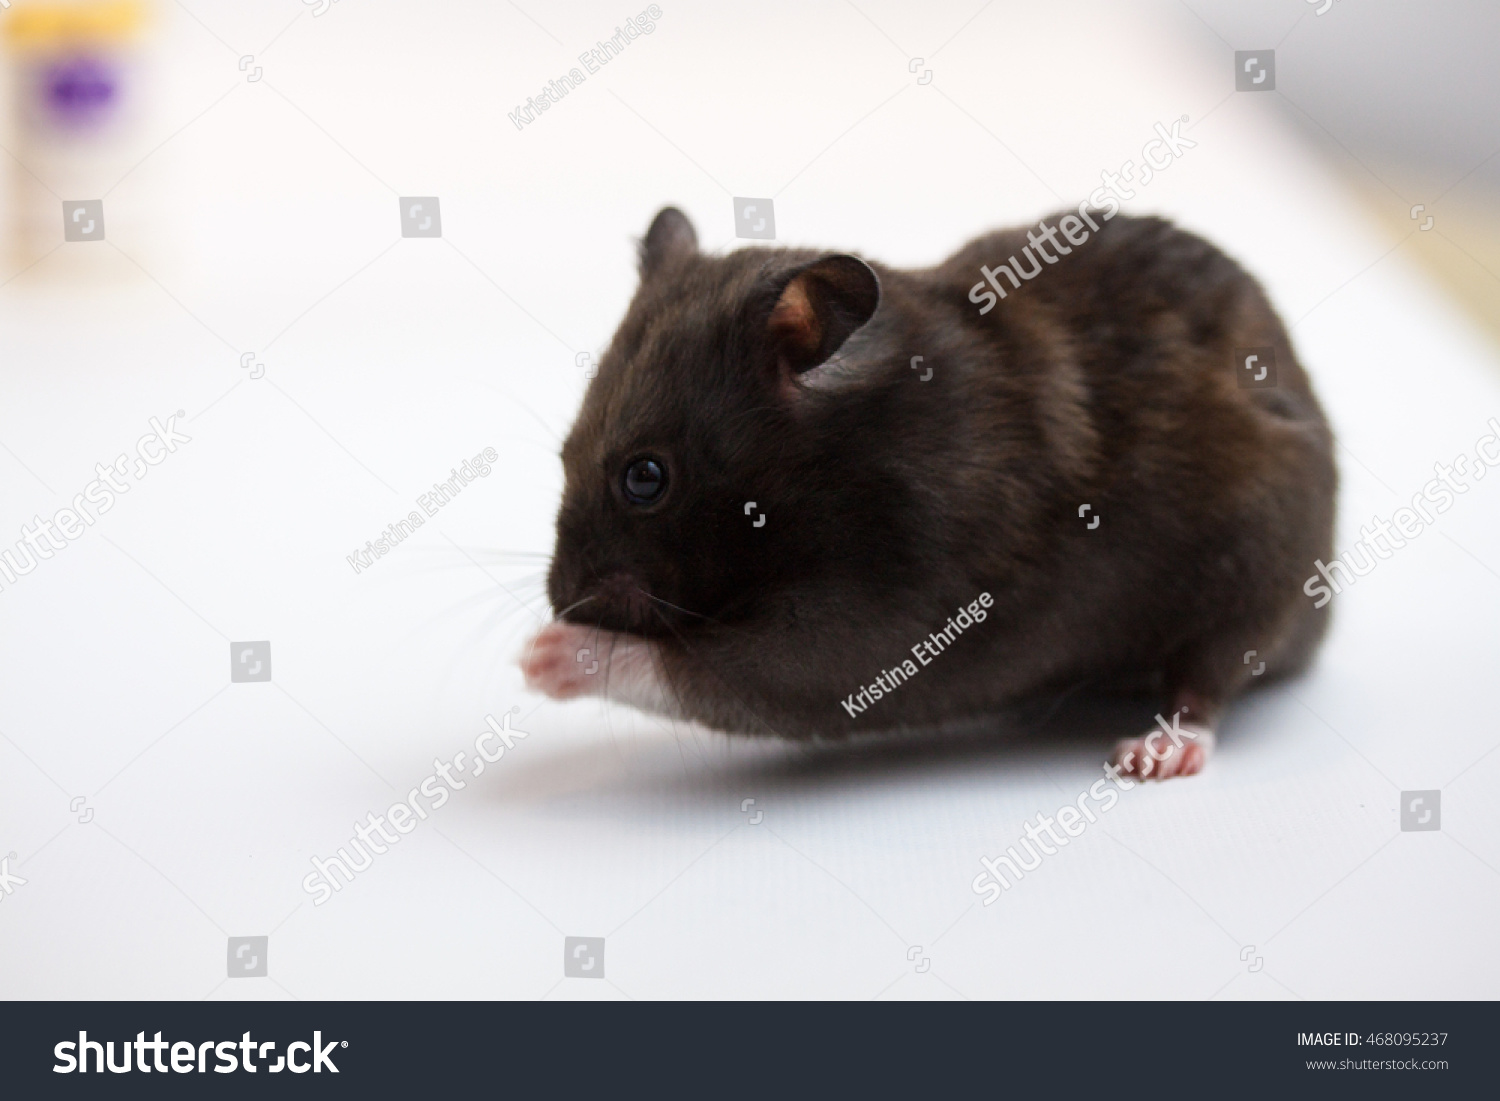 black teddy bear hamster